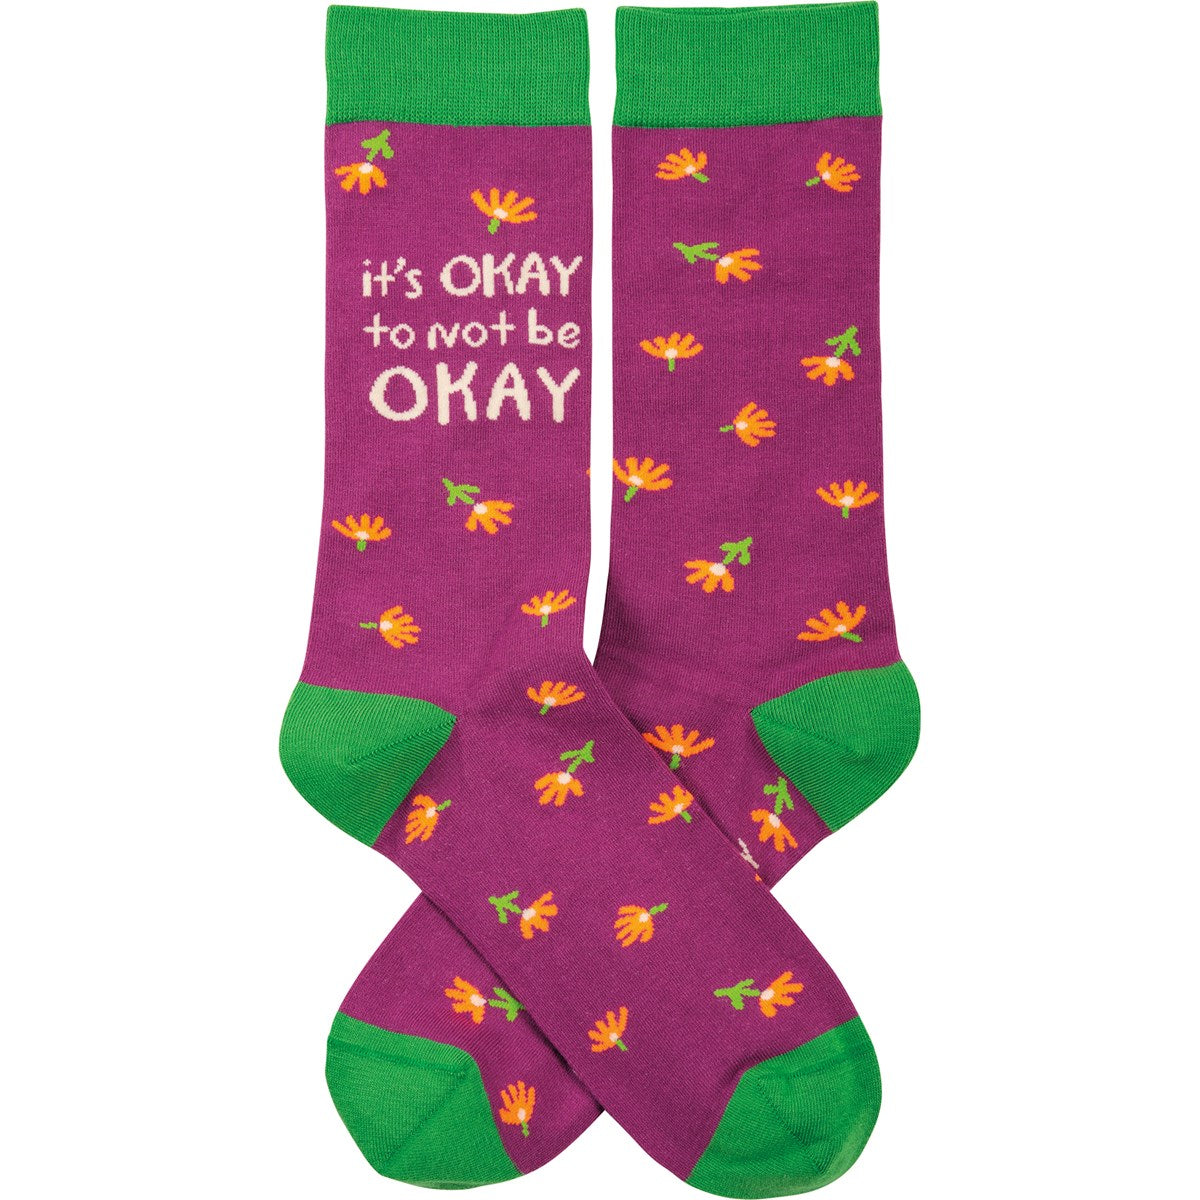 Socks - "It's Okay To Not Be Okay"